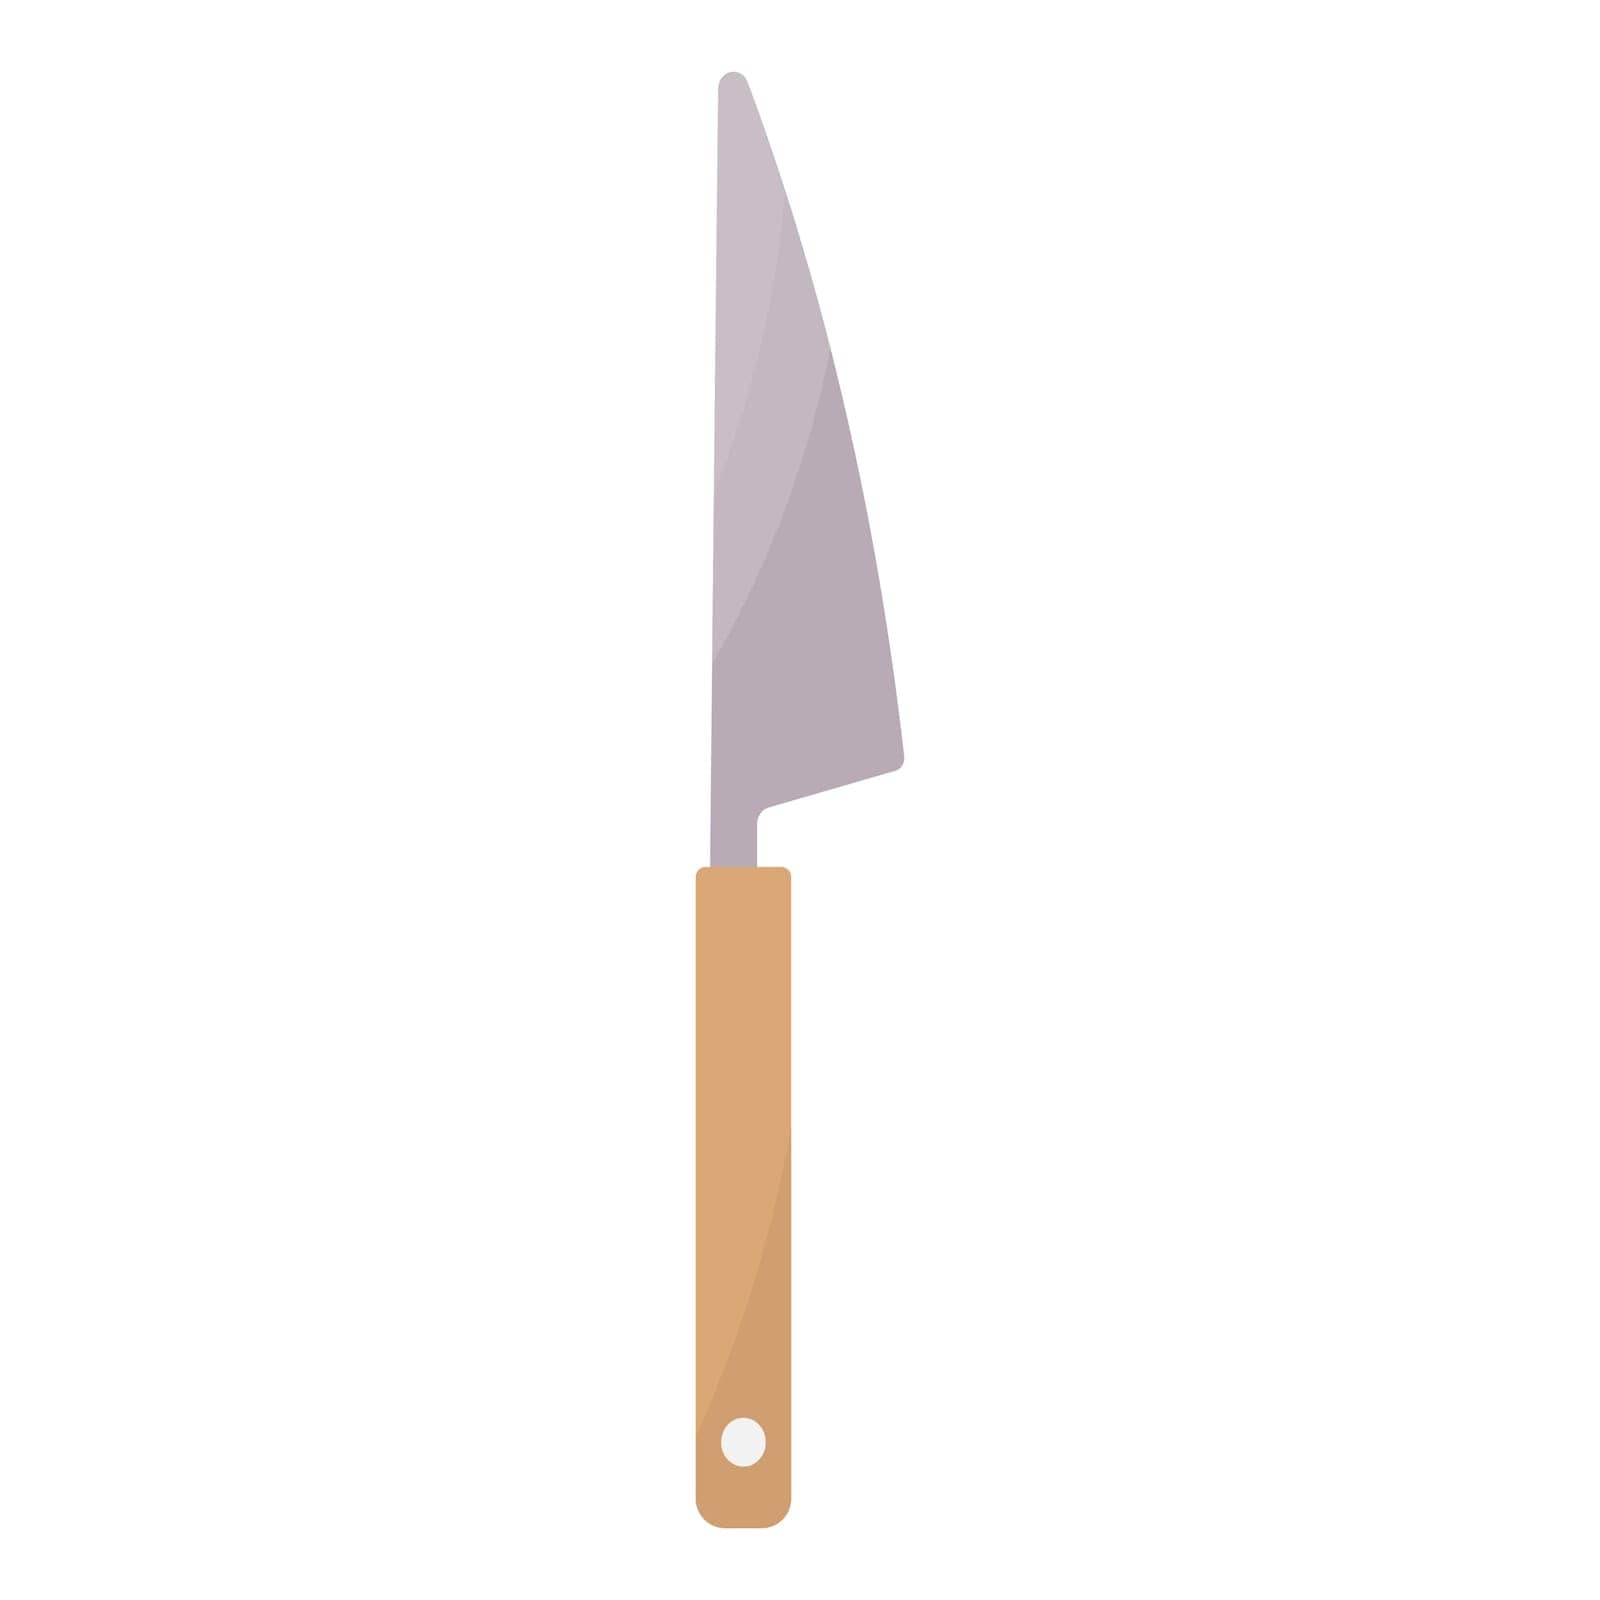 knife kitchen sharp cut cook icon element vector illustration